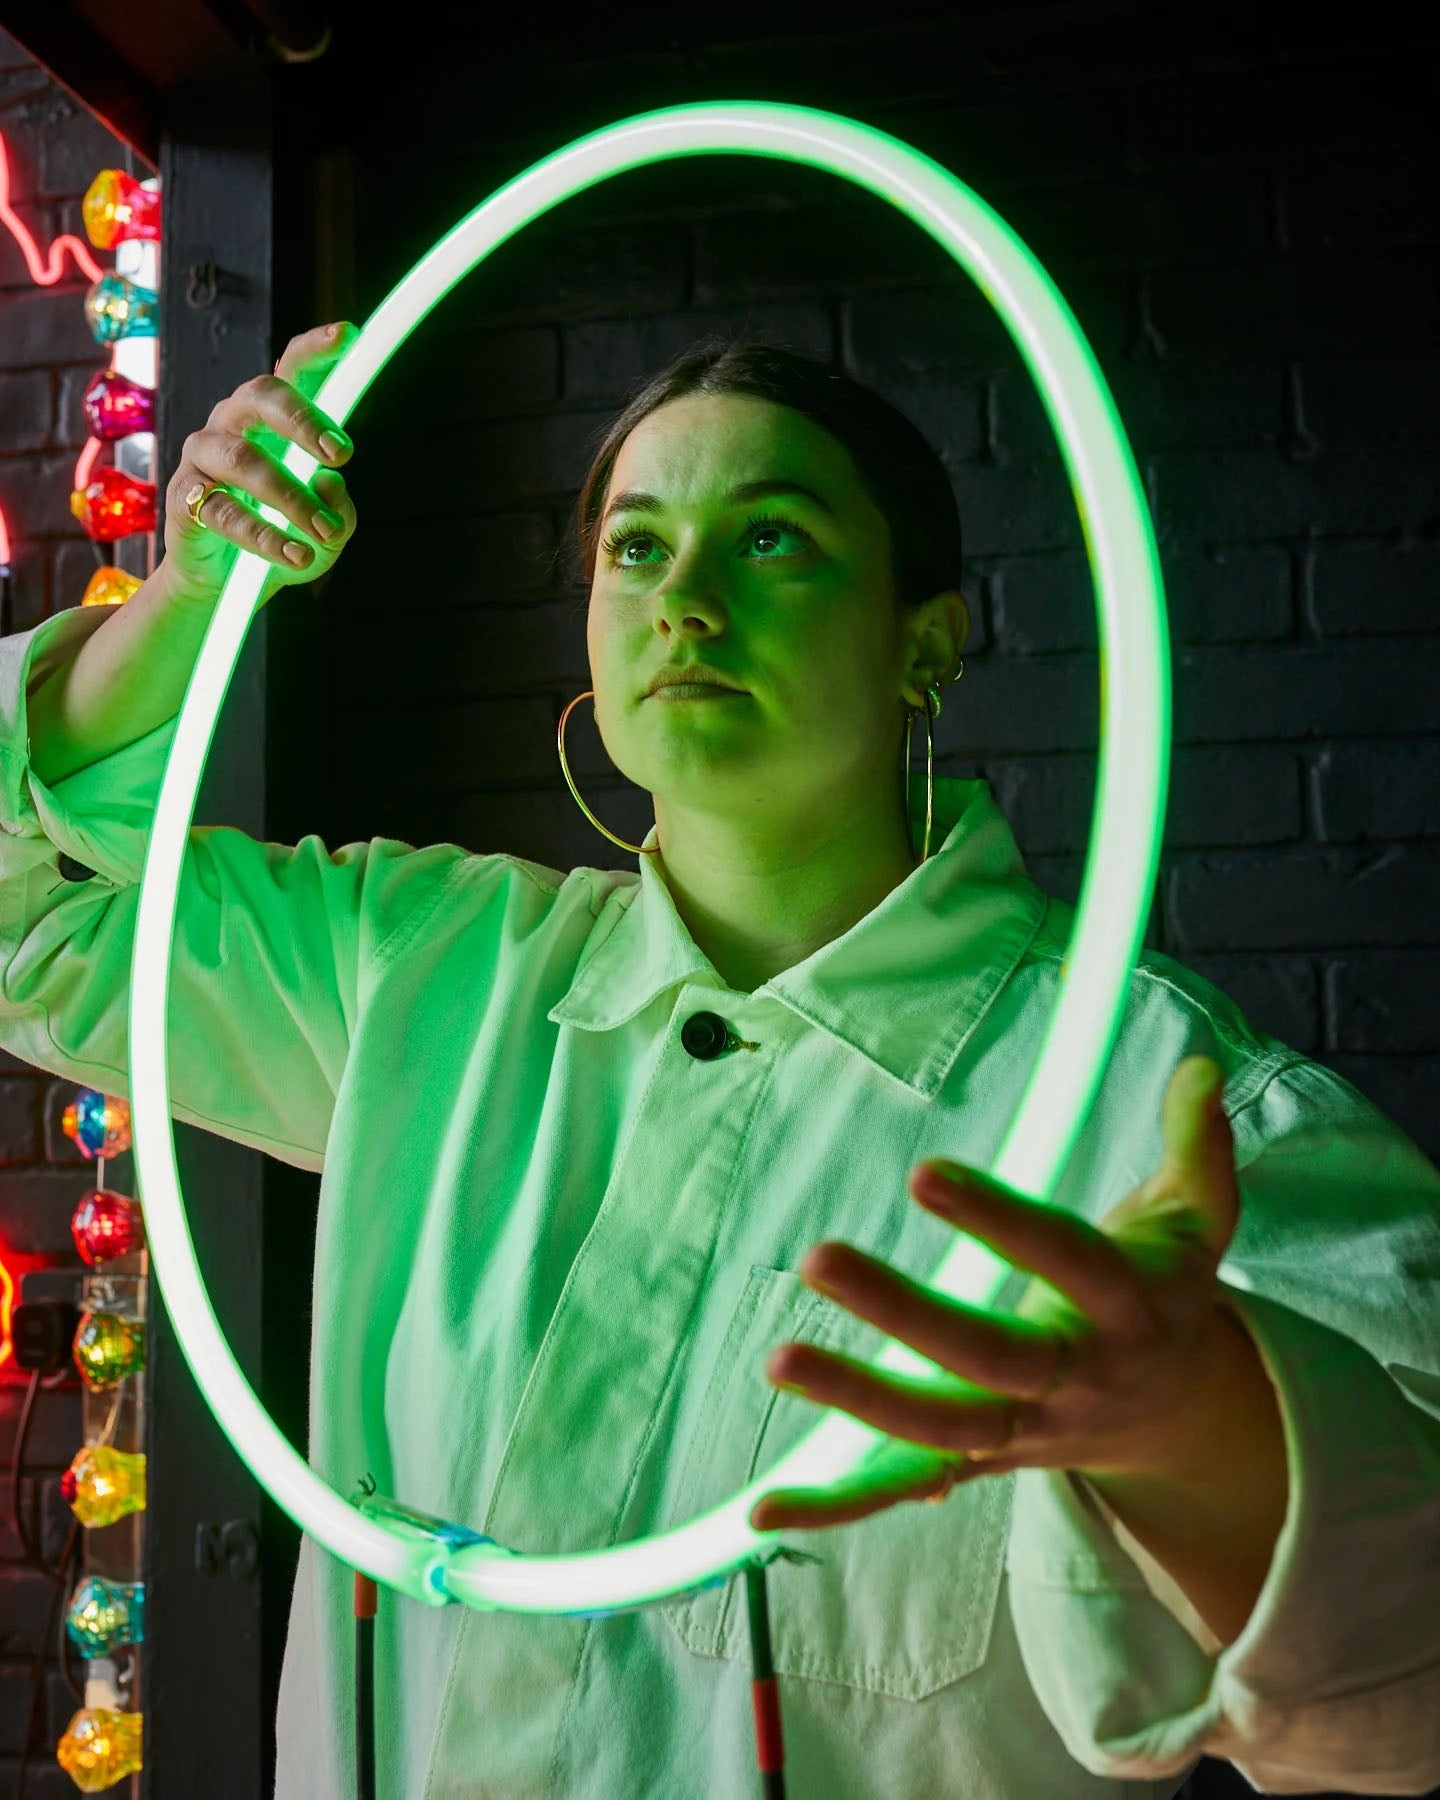 Standard office attire | Daisy Doig, neon artist, Brighton